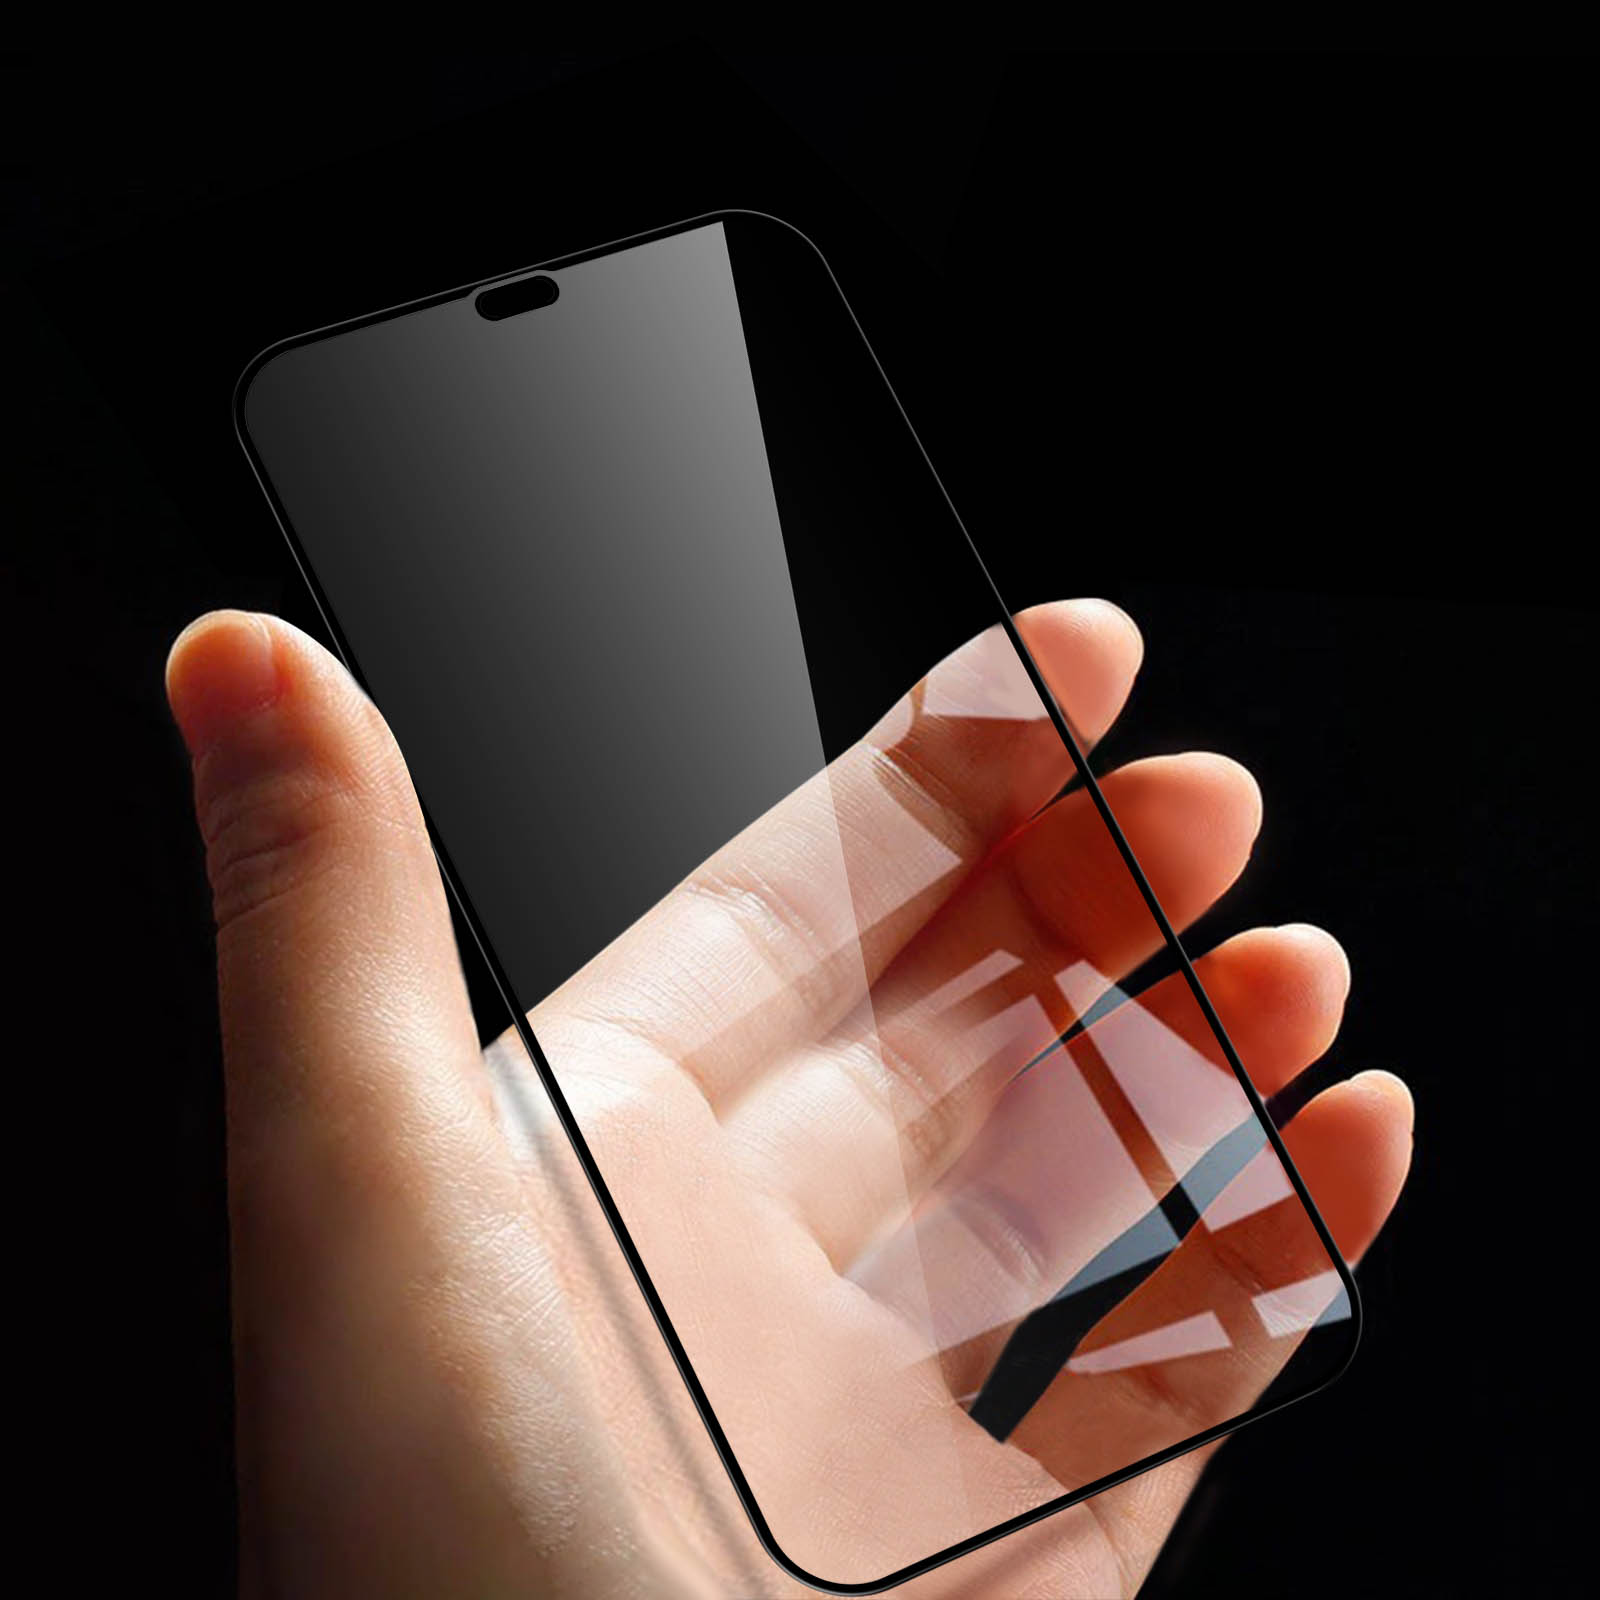 iPhone 12 Mini Protection écran en verre trempé Mobilax